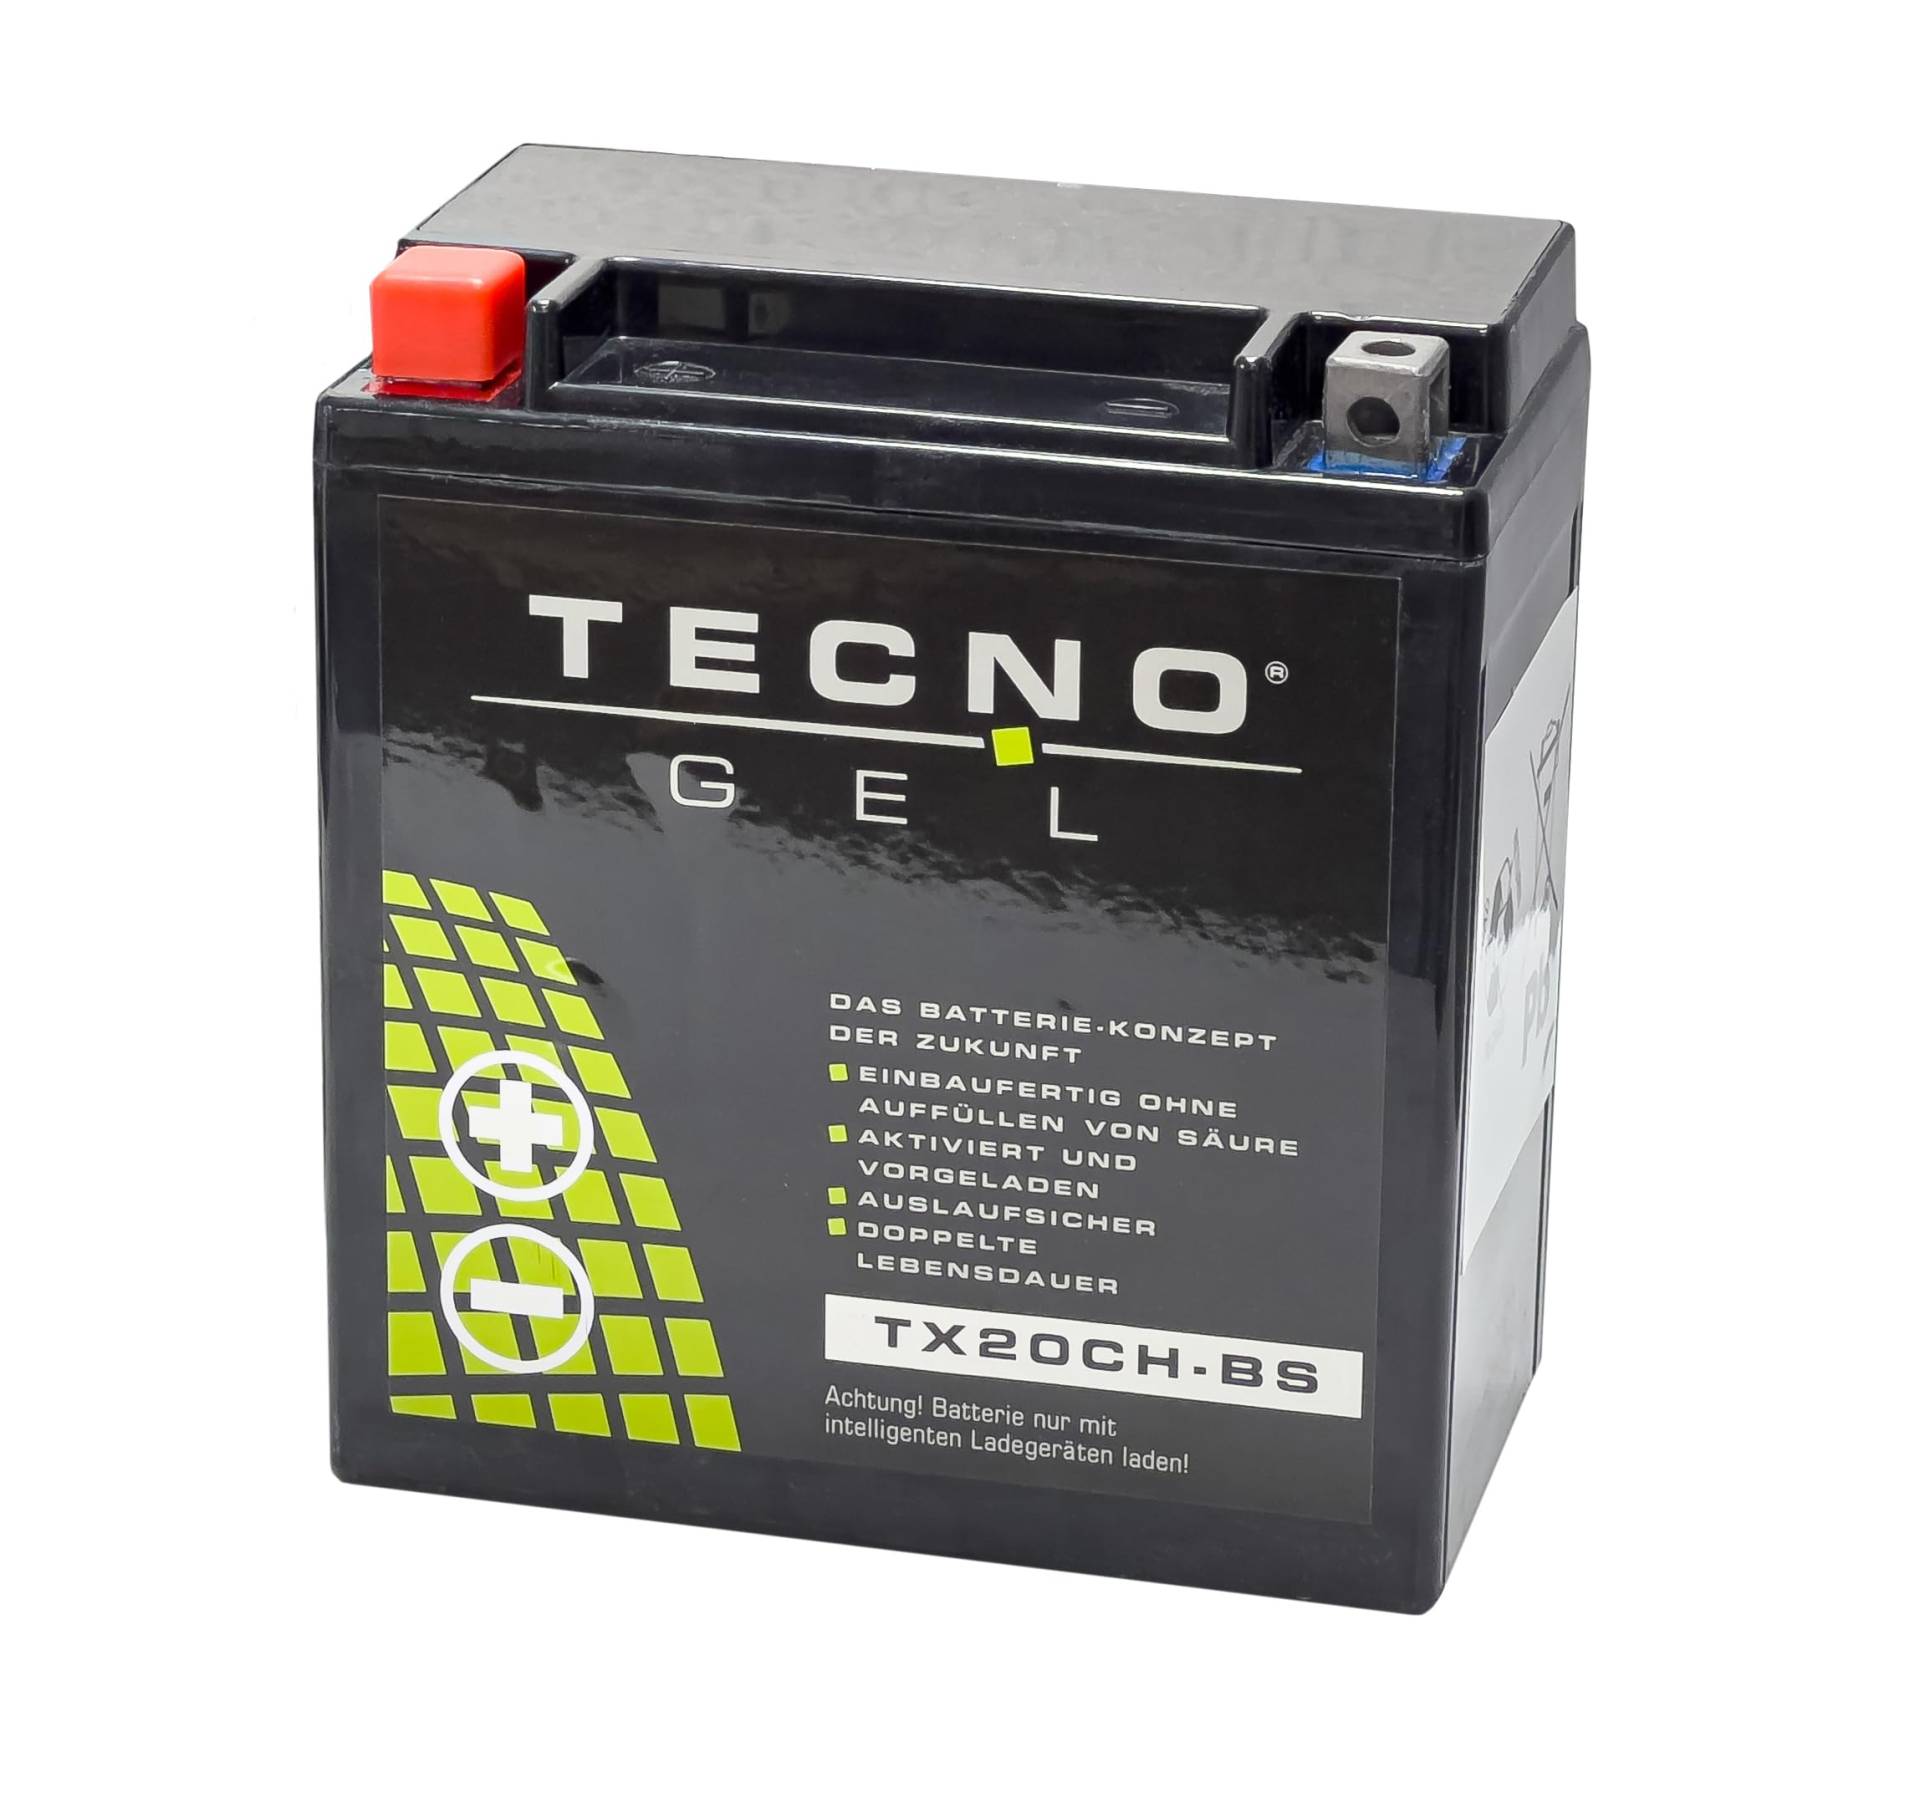 TECNO-GEL Motorrad-Batterie für YTX20CH-BS für HONDA XL 1000 V/VA m/o ABS VARADERO 2003-2013, 12V Gel-Batterie 18 Ah, 150x87x161 mm Pol + - von Wirth-Federn